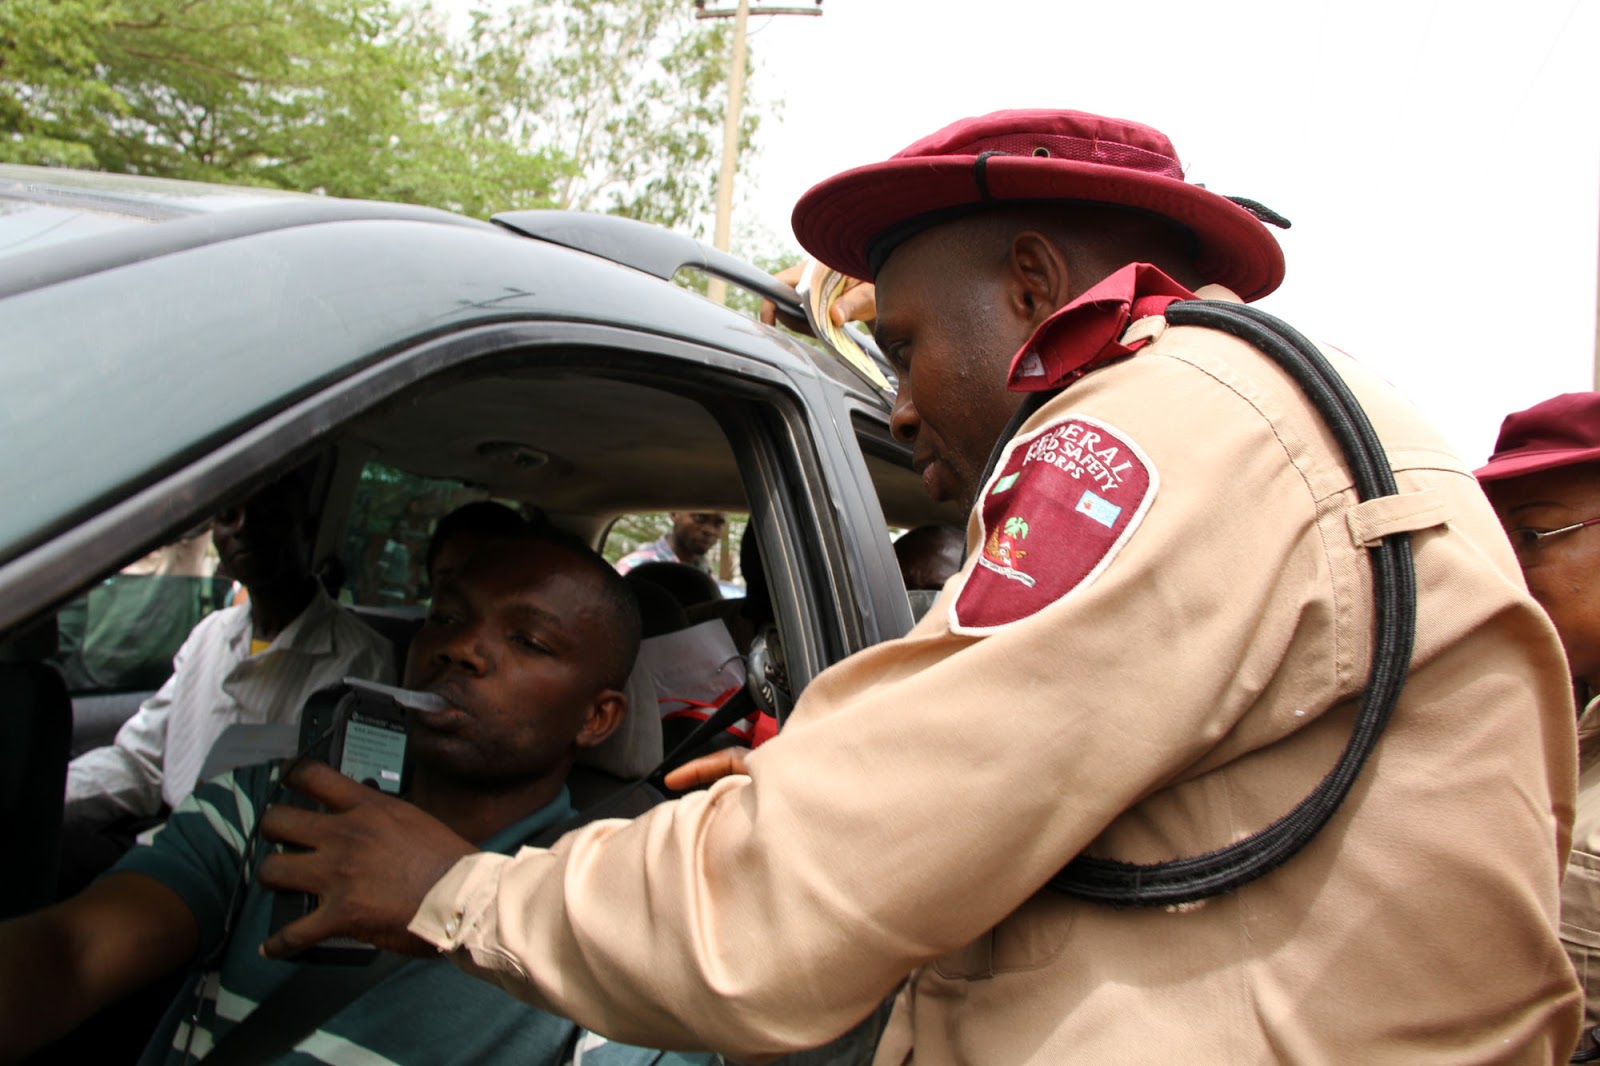 frsc-nigeria-sends-80-traffic-offenders-for-mental-check-up-exlink-lodge-nigeria